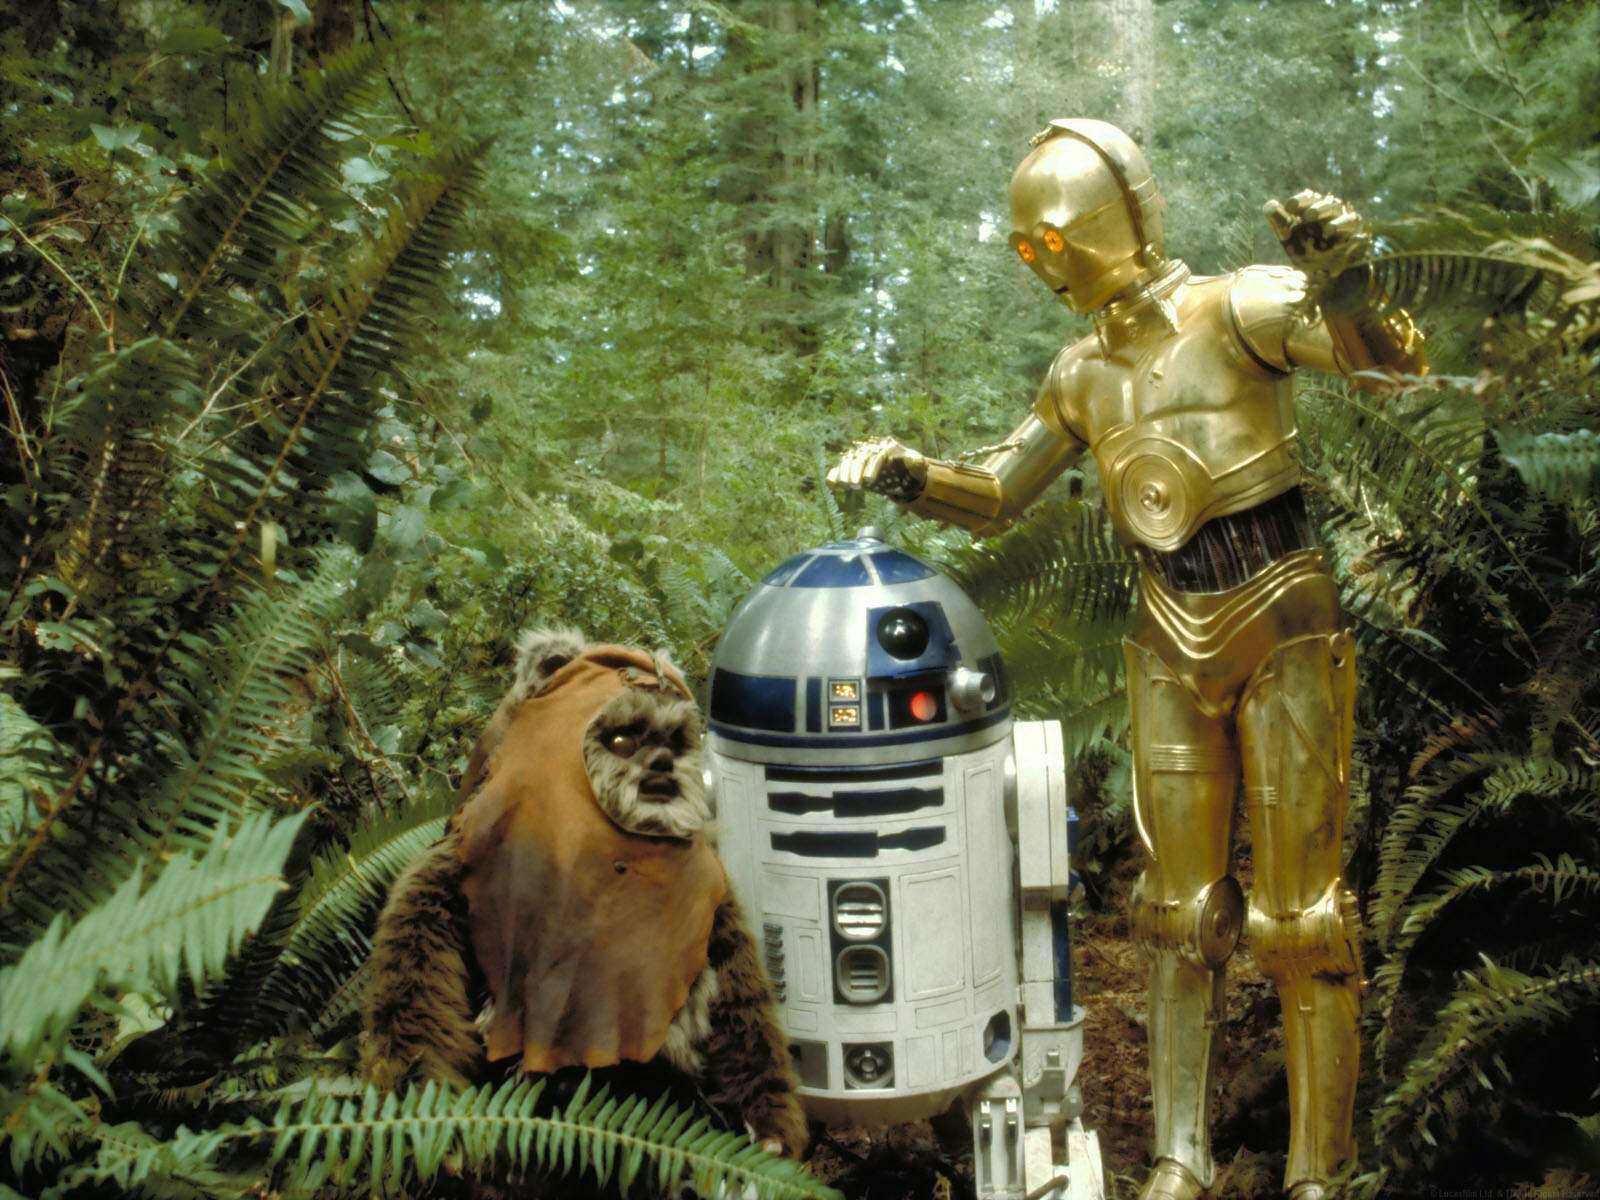 R2 D2 And C 3po Meet An Ewok On Endor In Star Wars Episode Vi Return